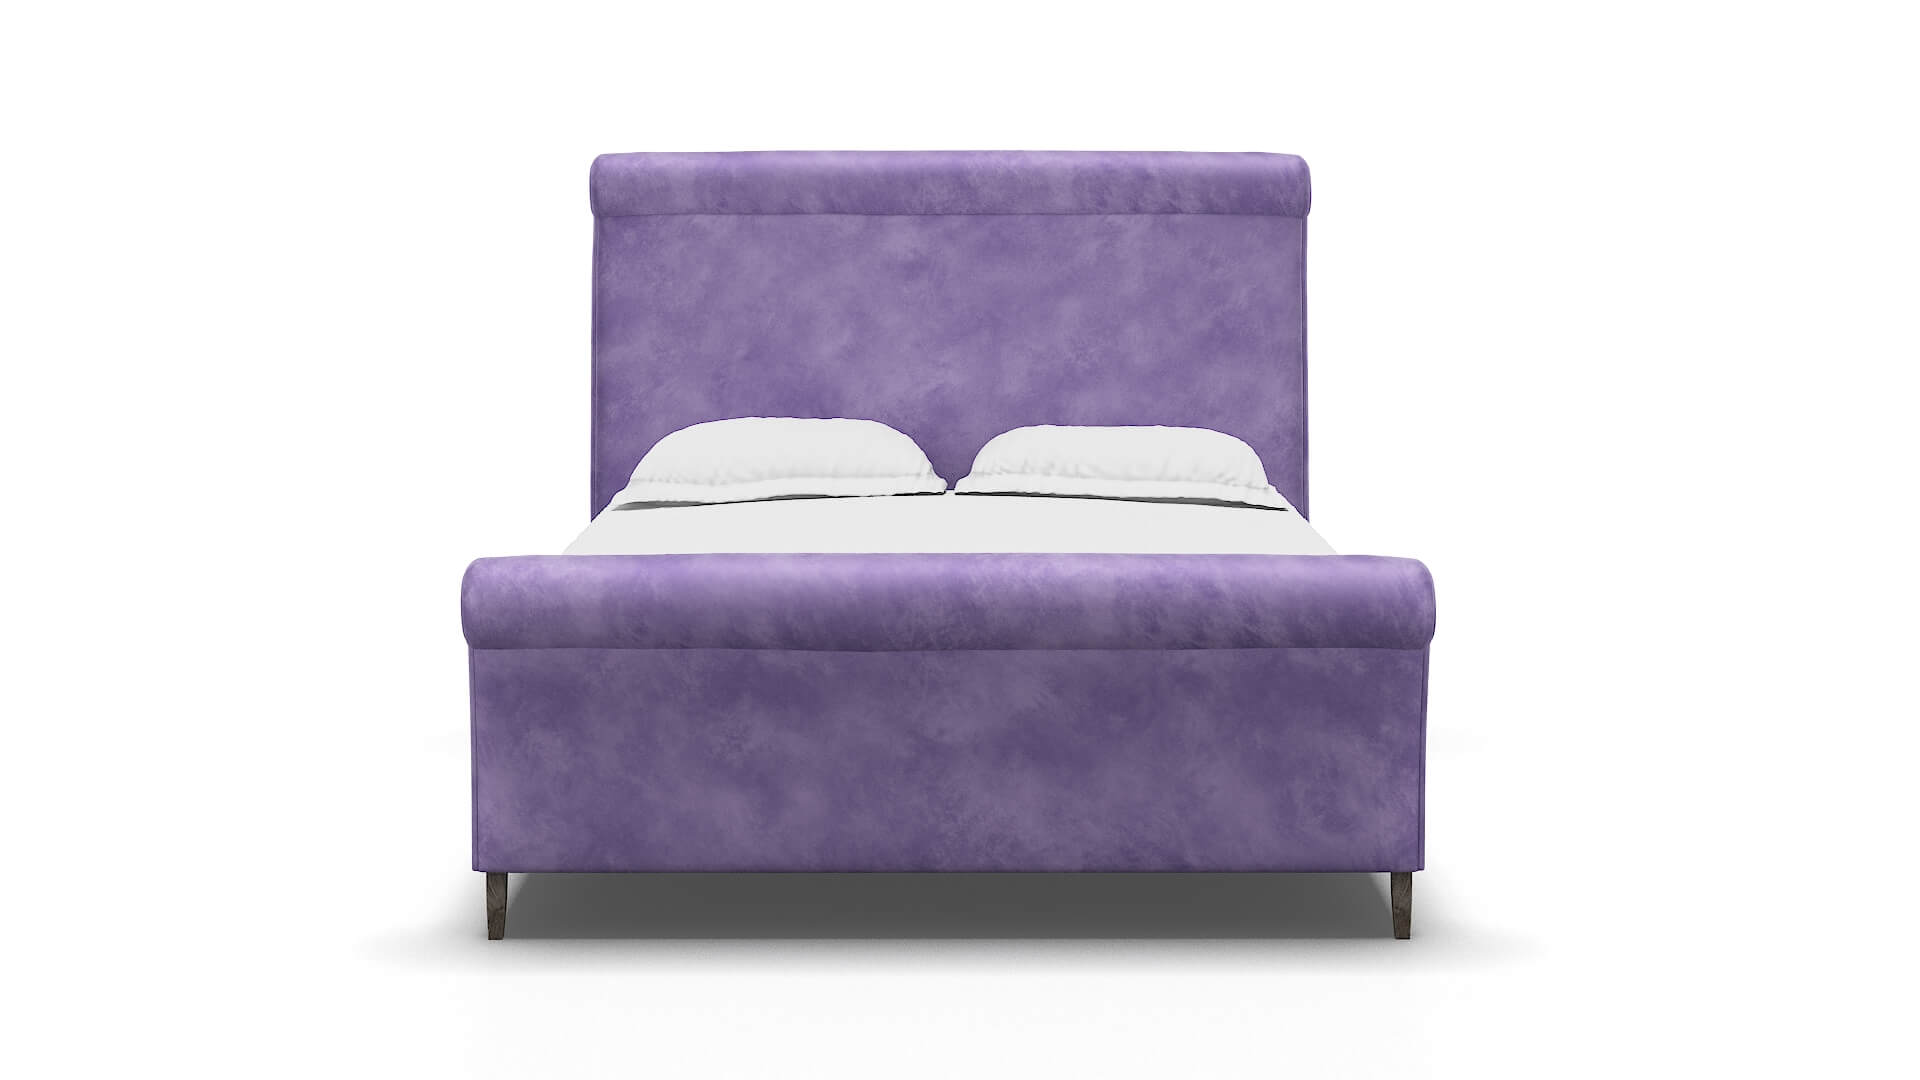 Maja Royale Lavender chair espresso legs